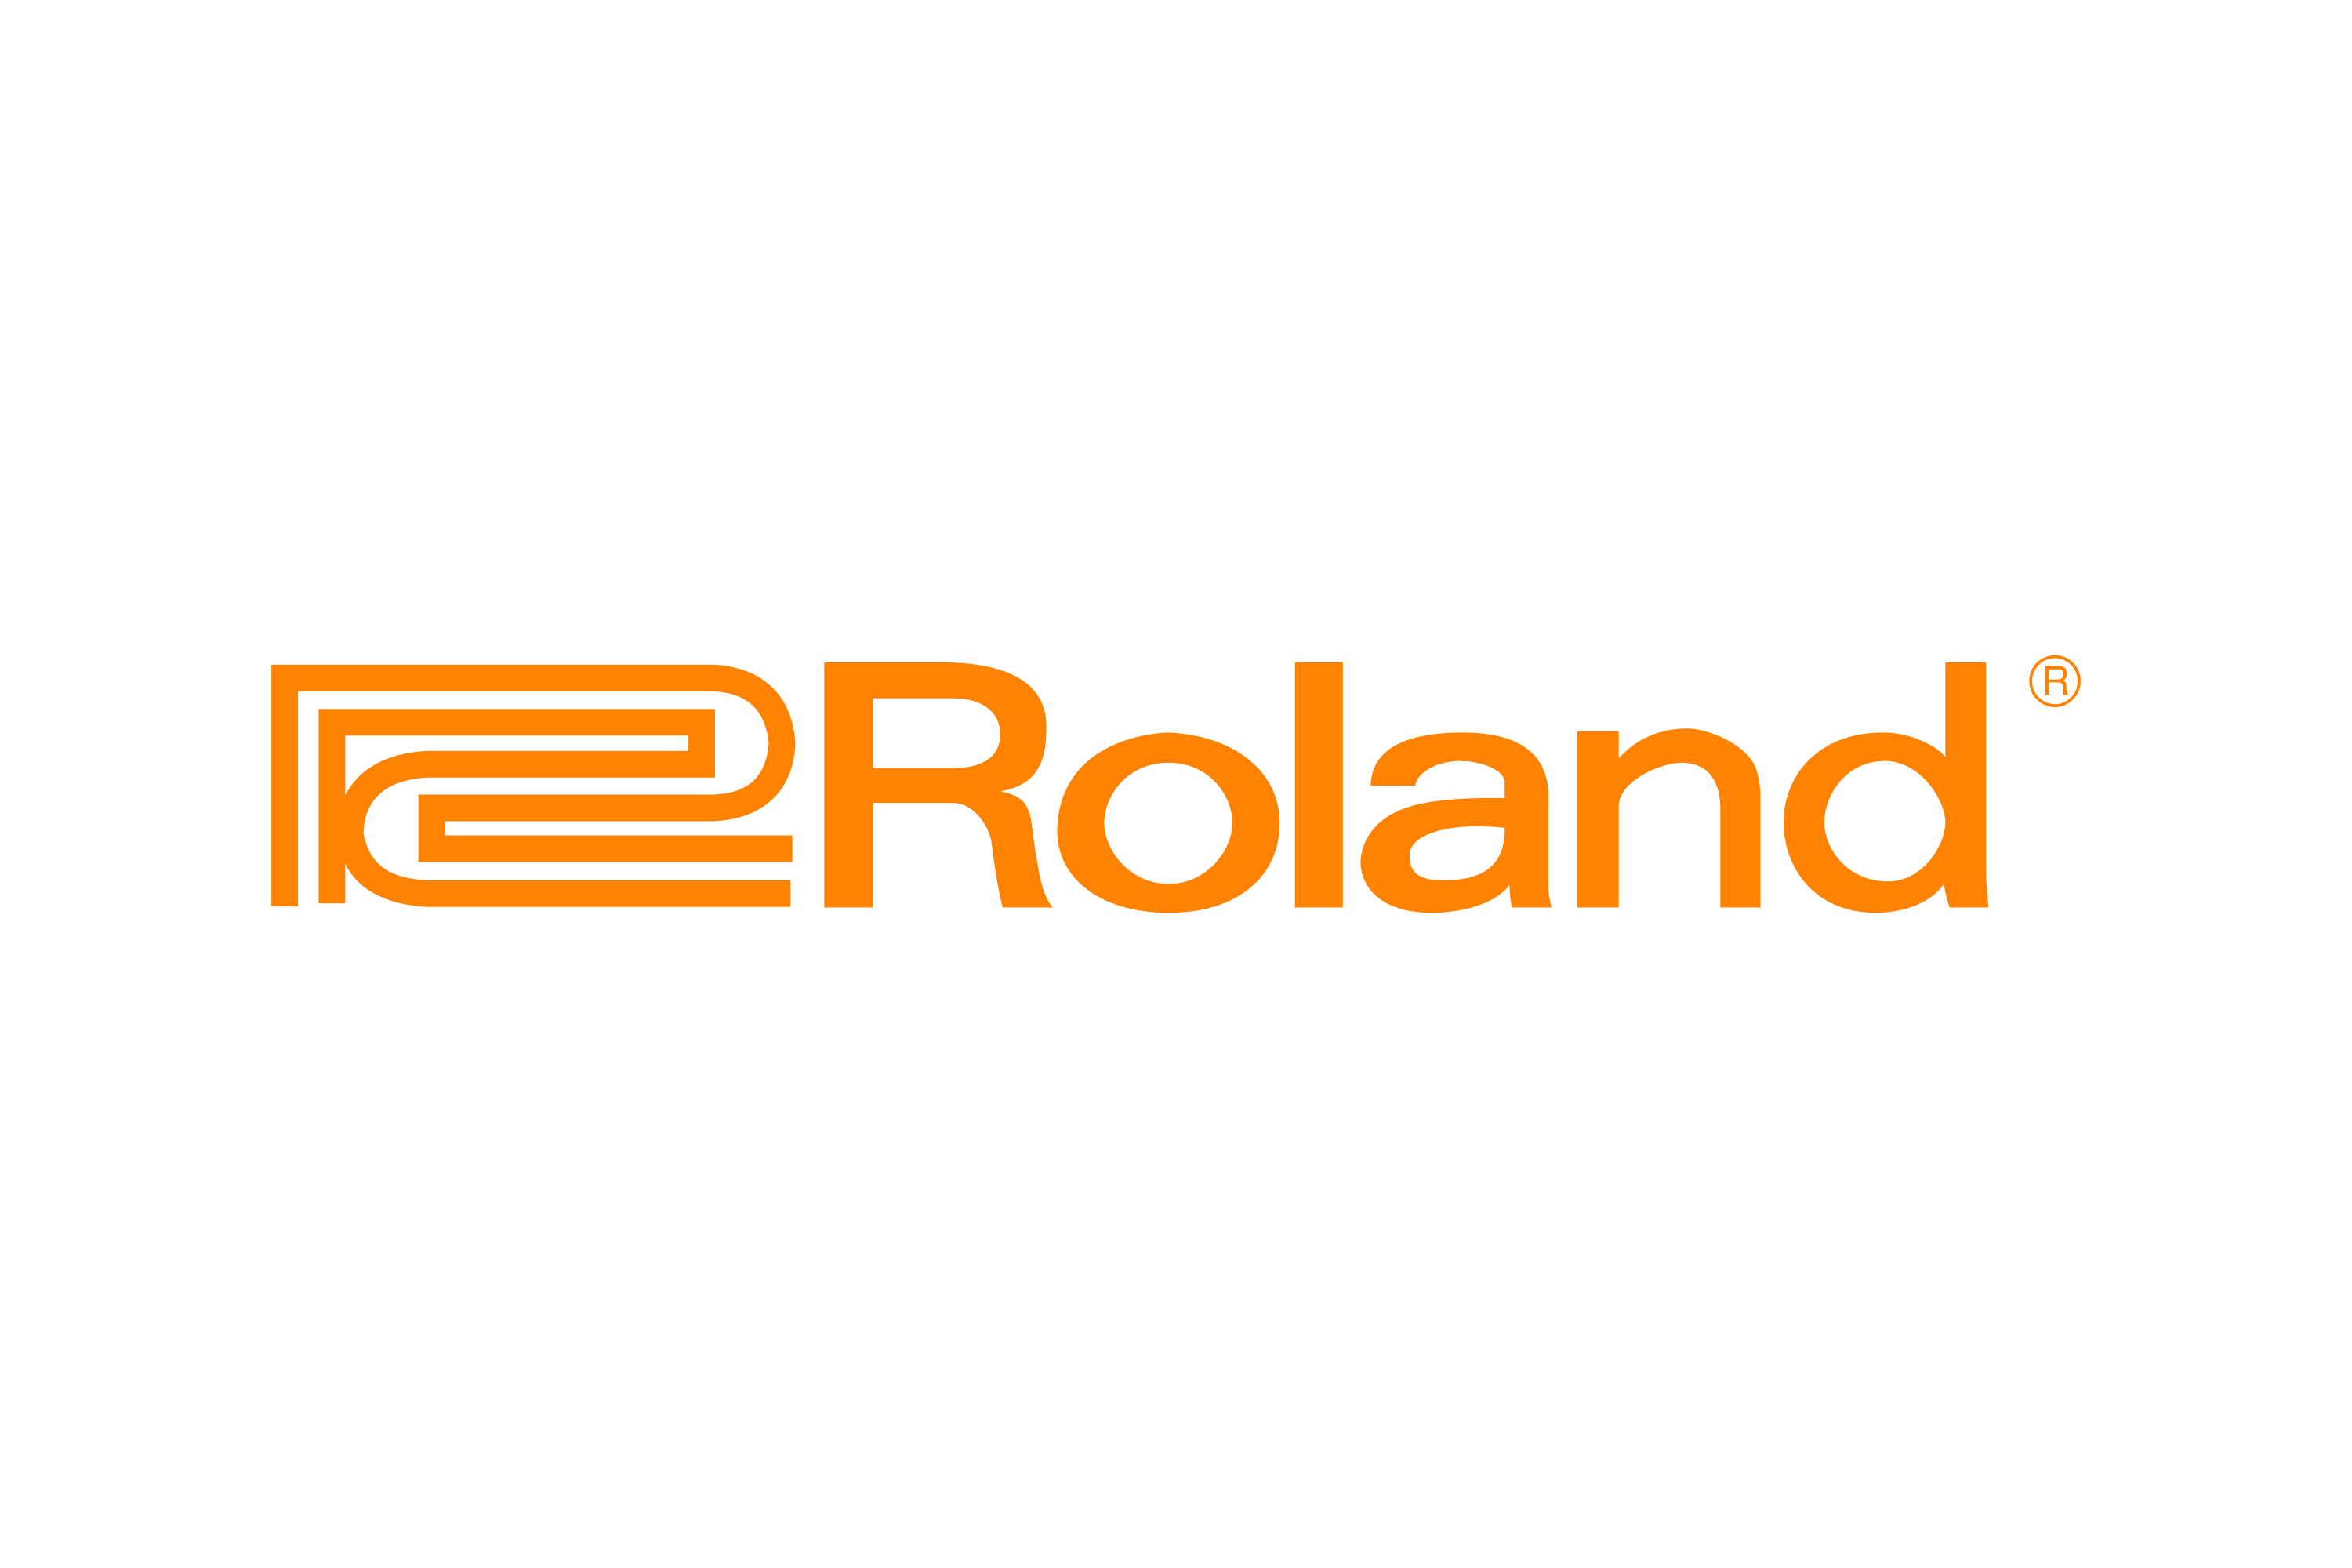 Download Roland Corporation Logo in SVG Vector or PNG File Format